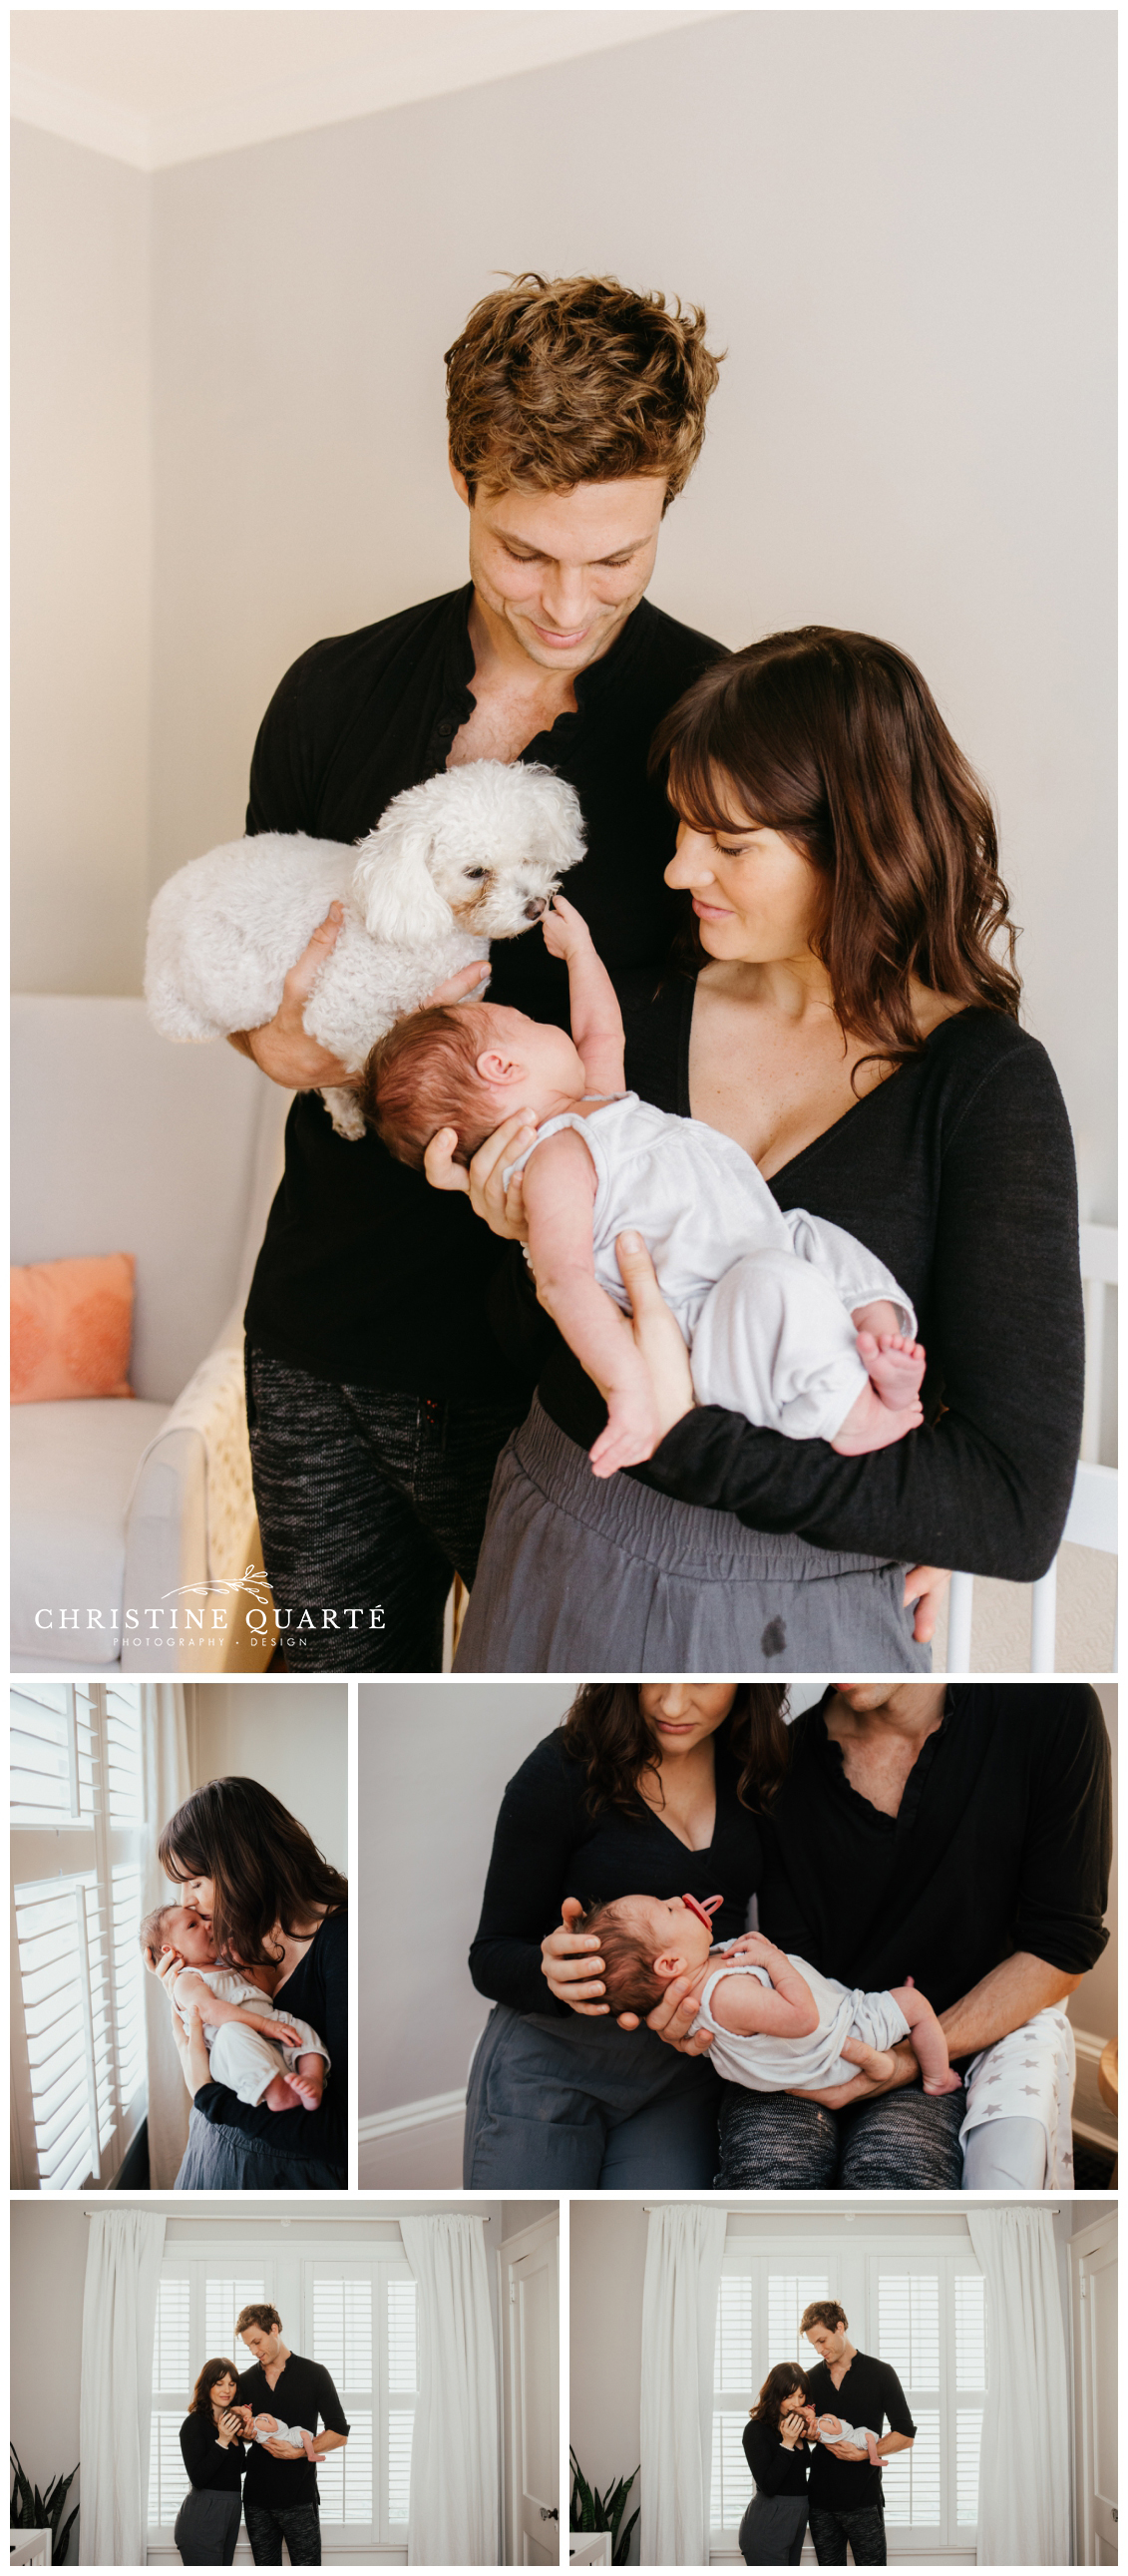 Christine Quarte Photography Newborn Lifestyle Photography Family Photos